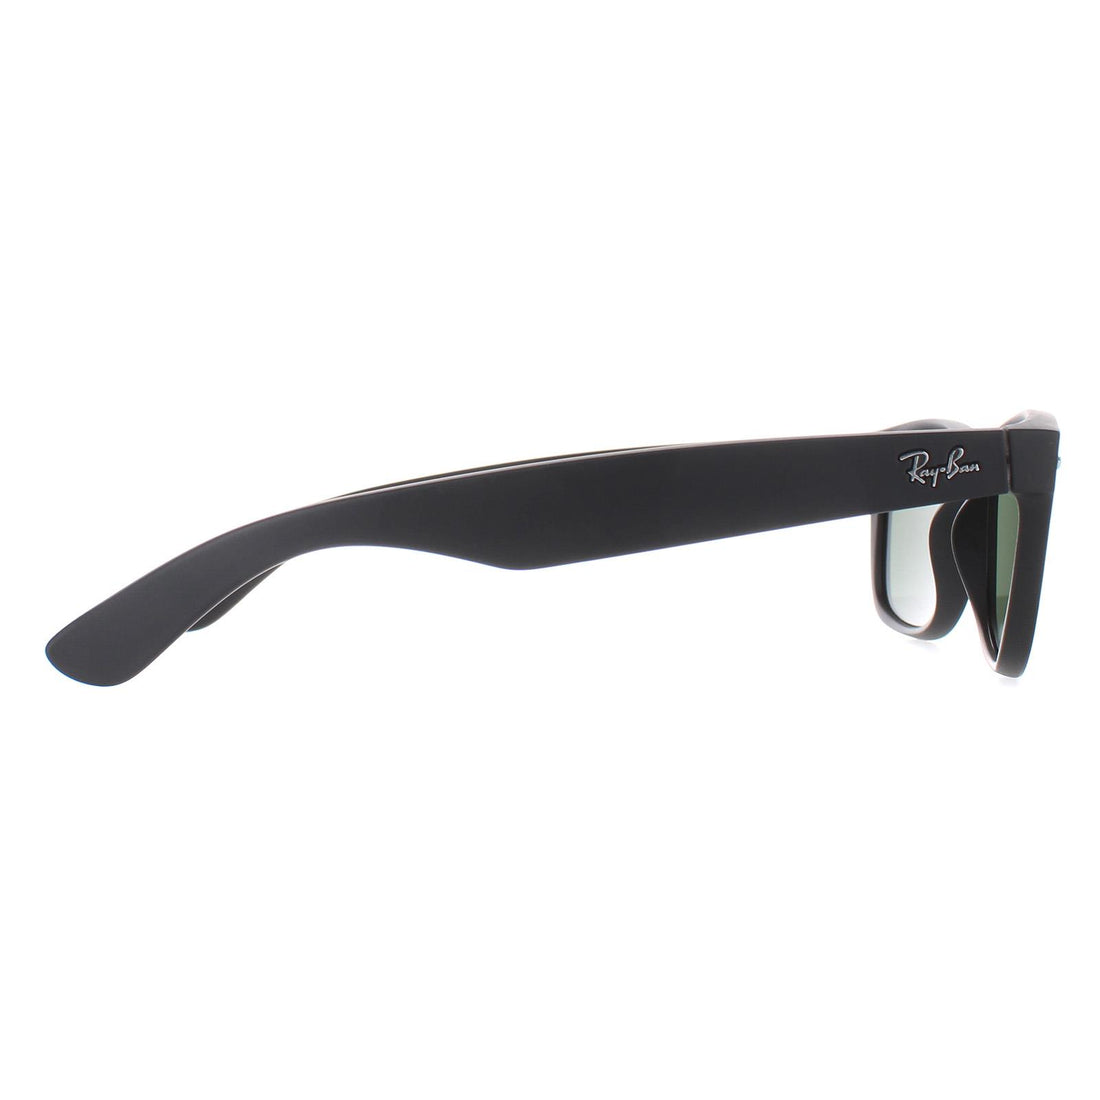 Ray-Ban Sunglasses New Wayfarer 2132 622 Black Rubber Green Small 52mm